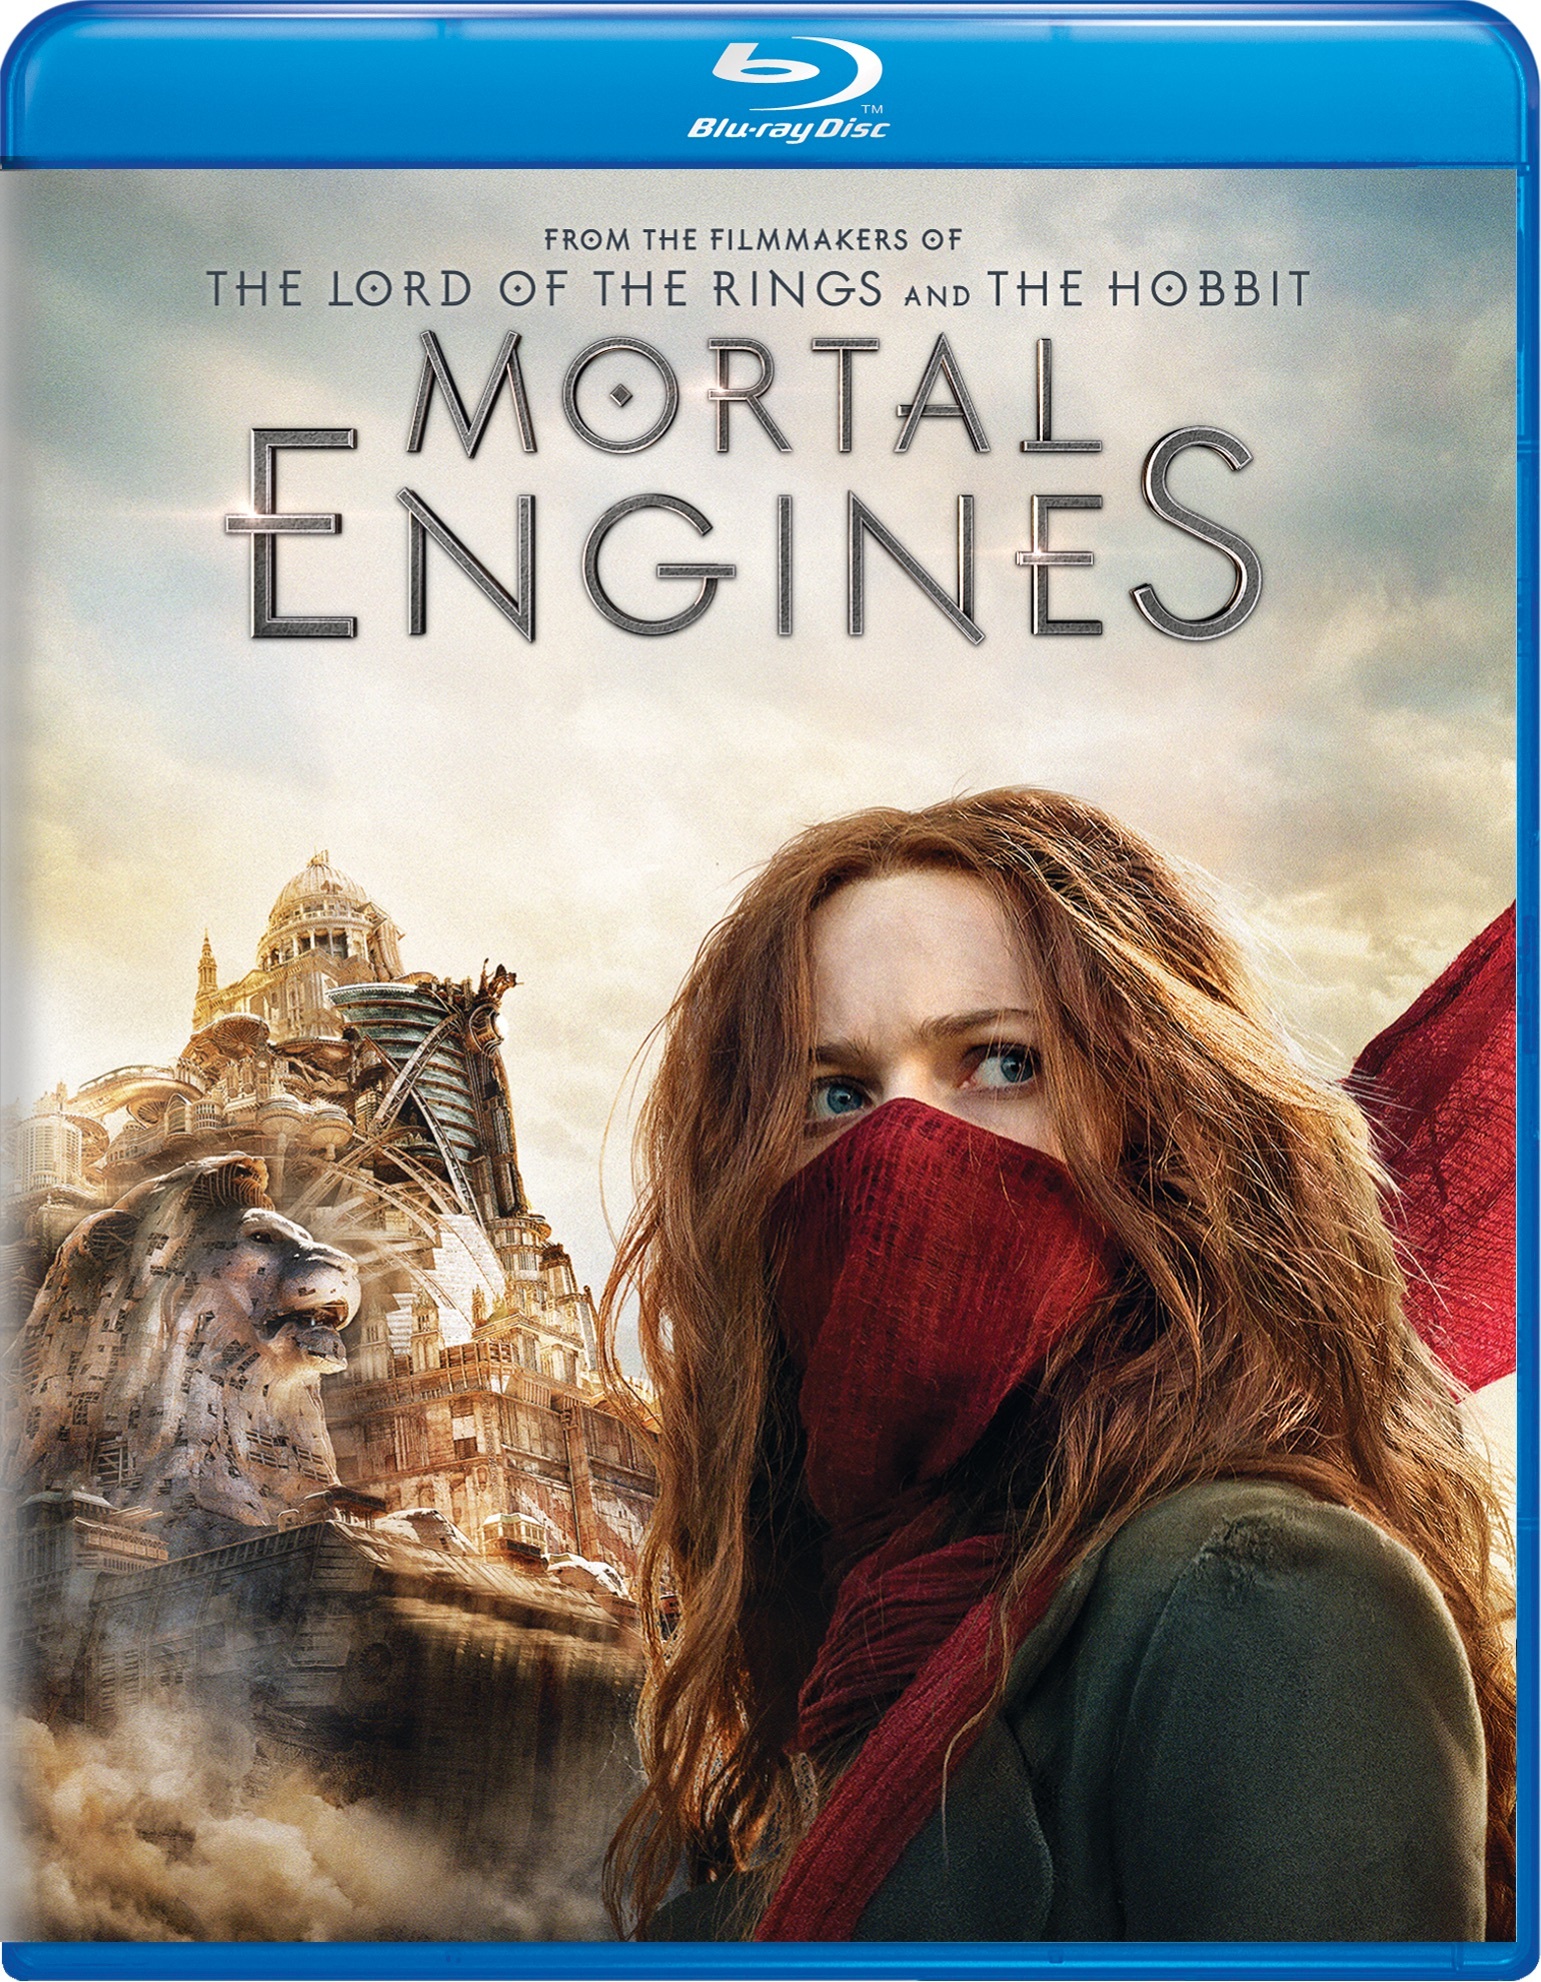 Mortal Engines (Blu-ray New Box Art) - Blu-ray [ 2018 ]  - Sci Fi Movies On Blu-ray - Movies On GRUV